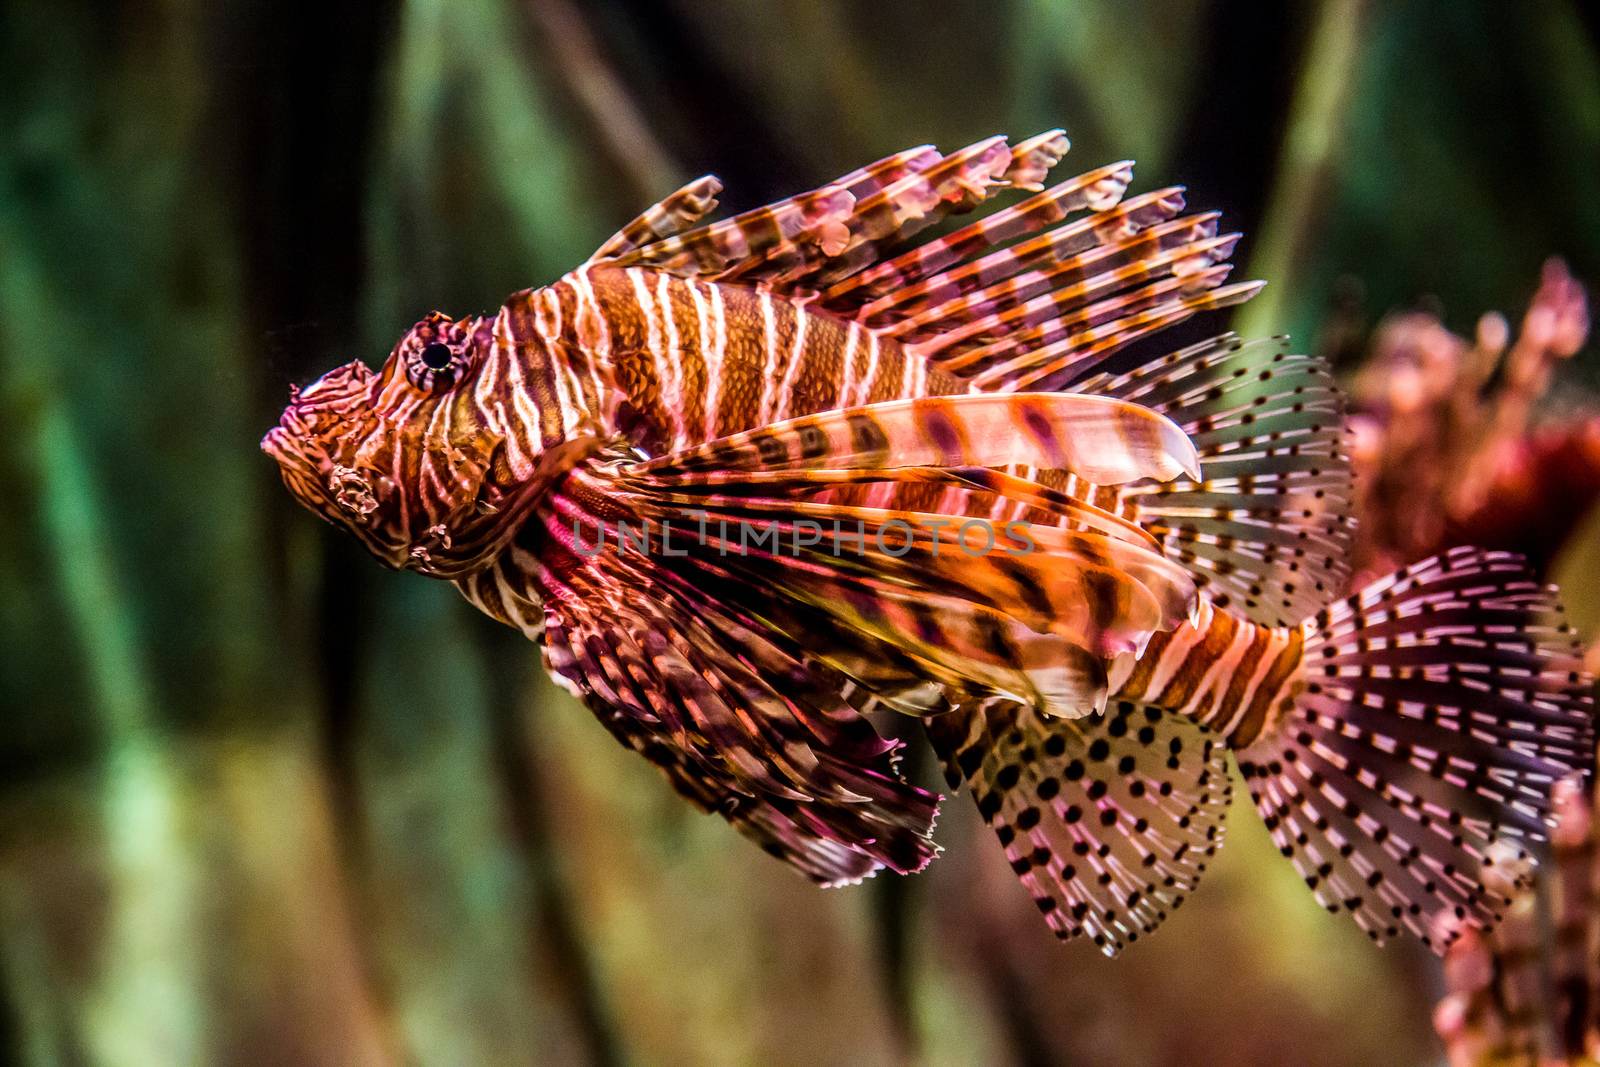 Close up view of a venomous Red lionfish by bloodua